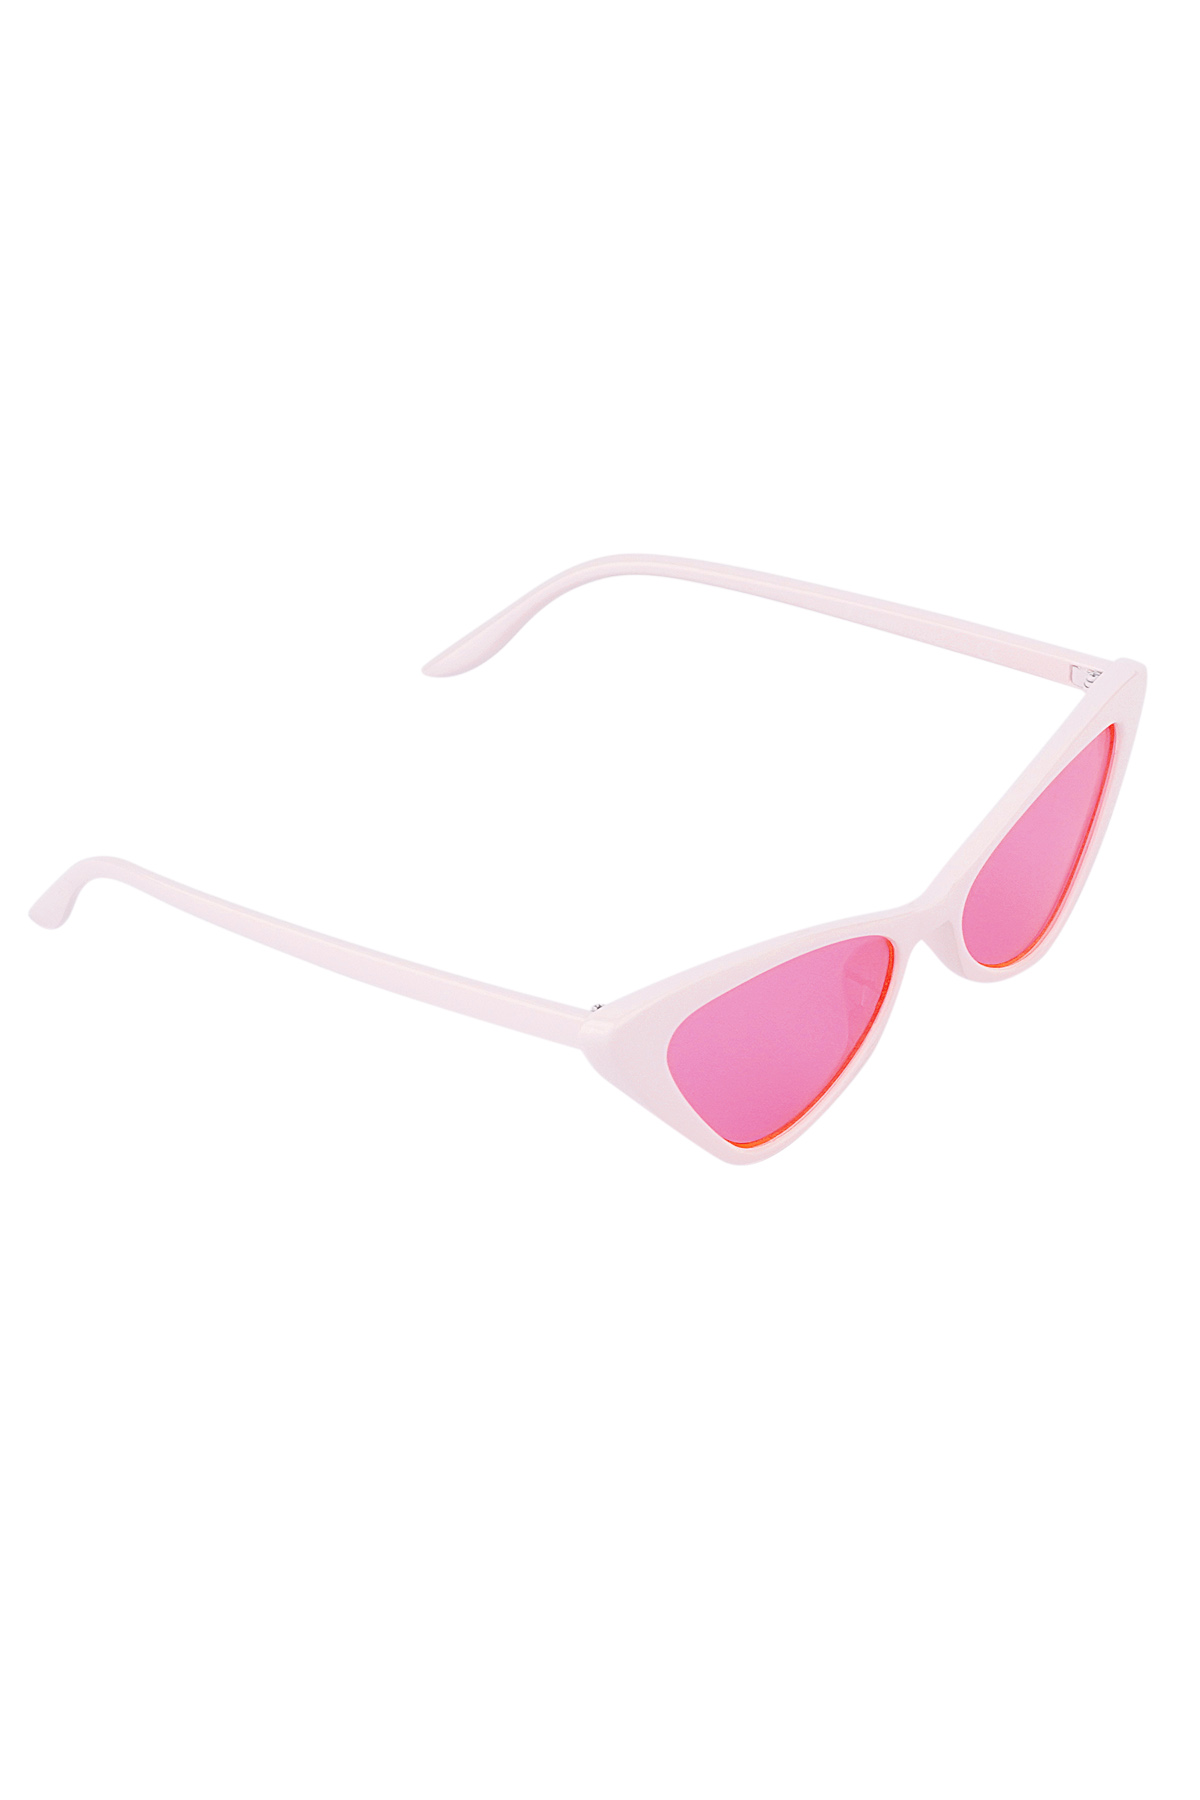 Barbie vibe sunglasses - pink